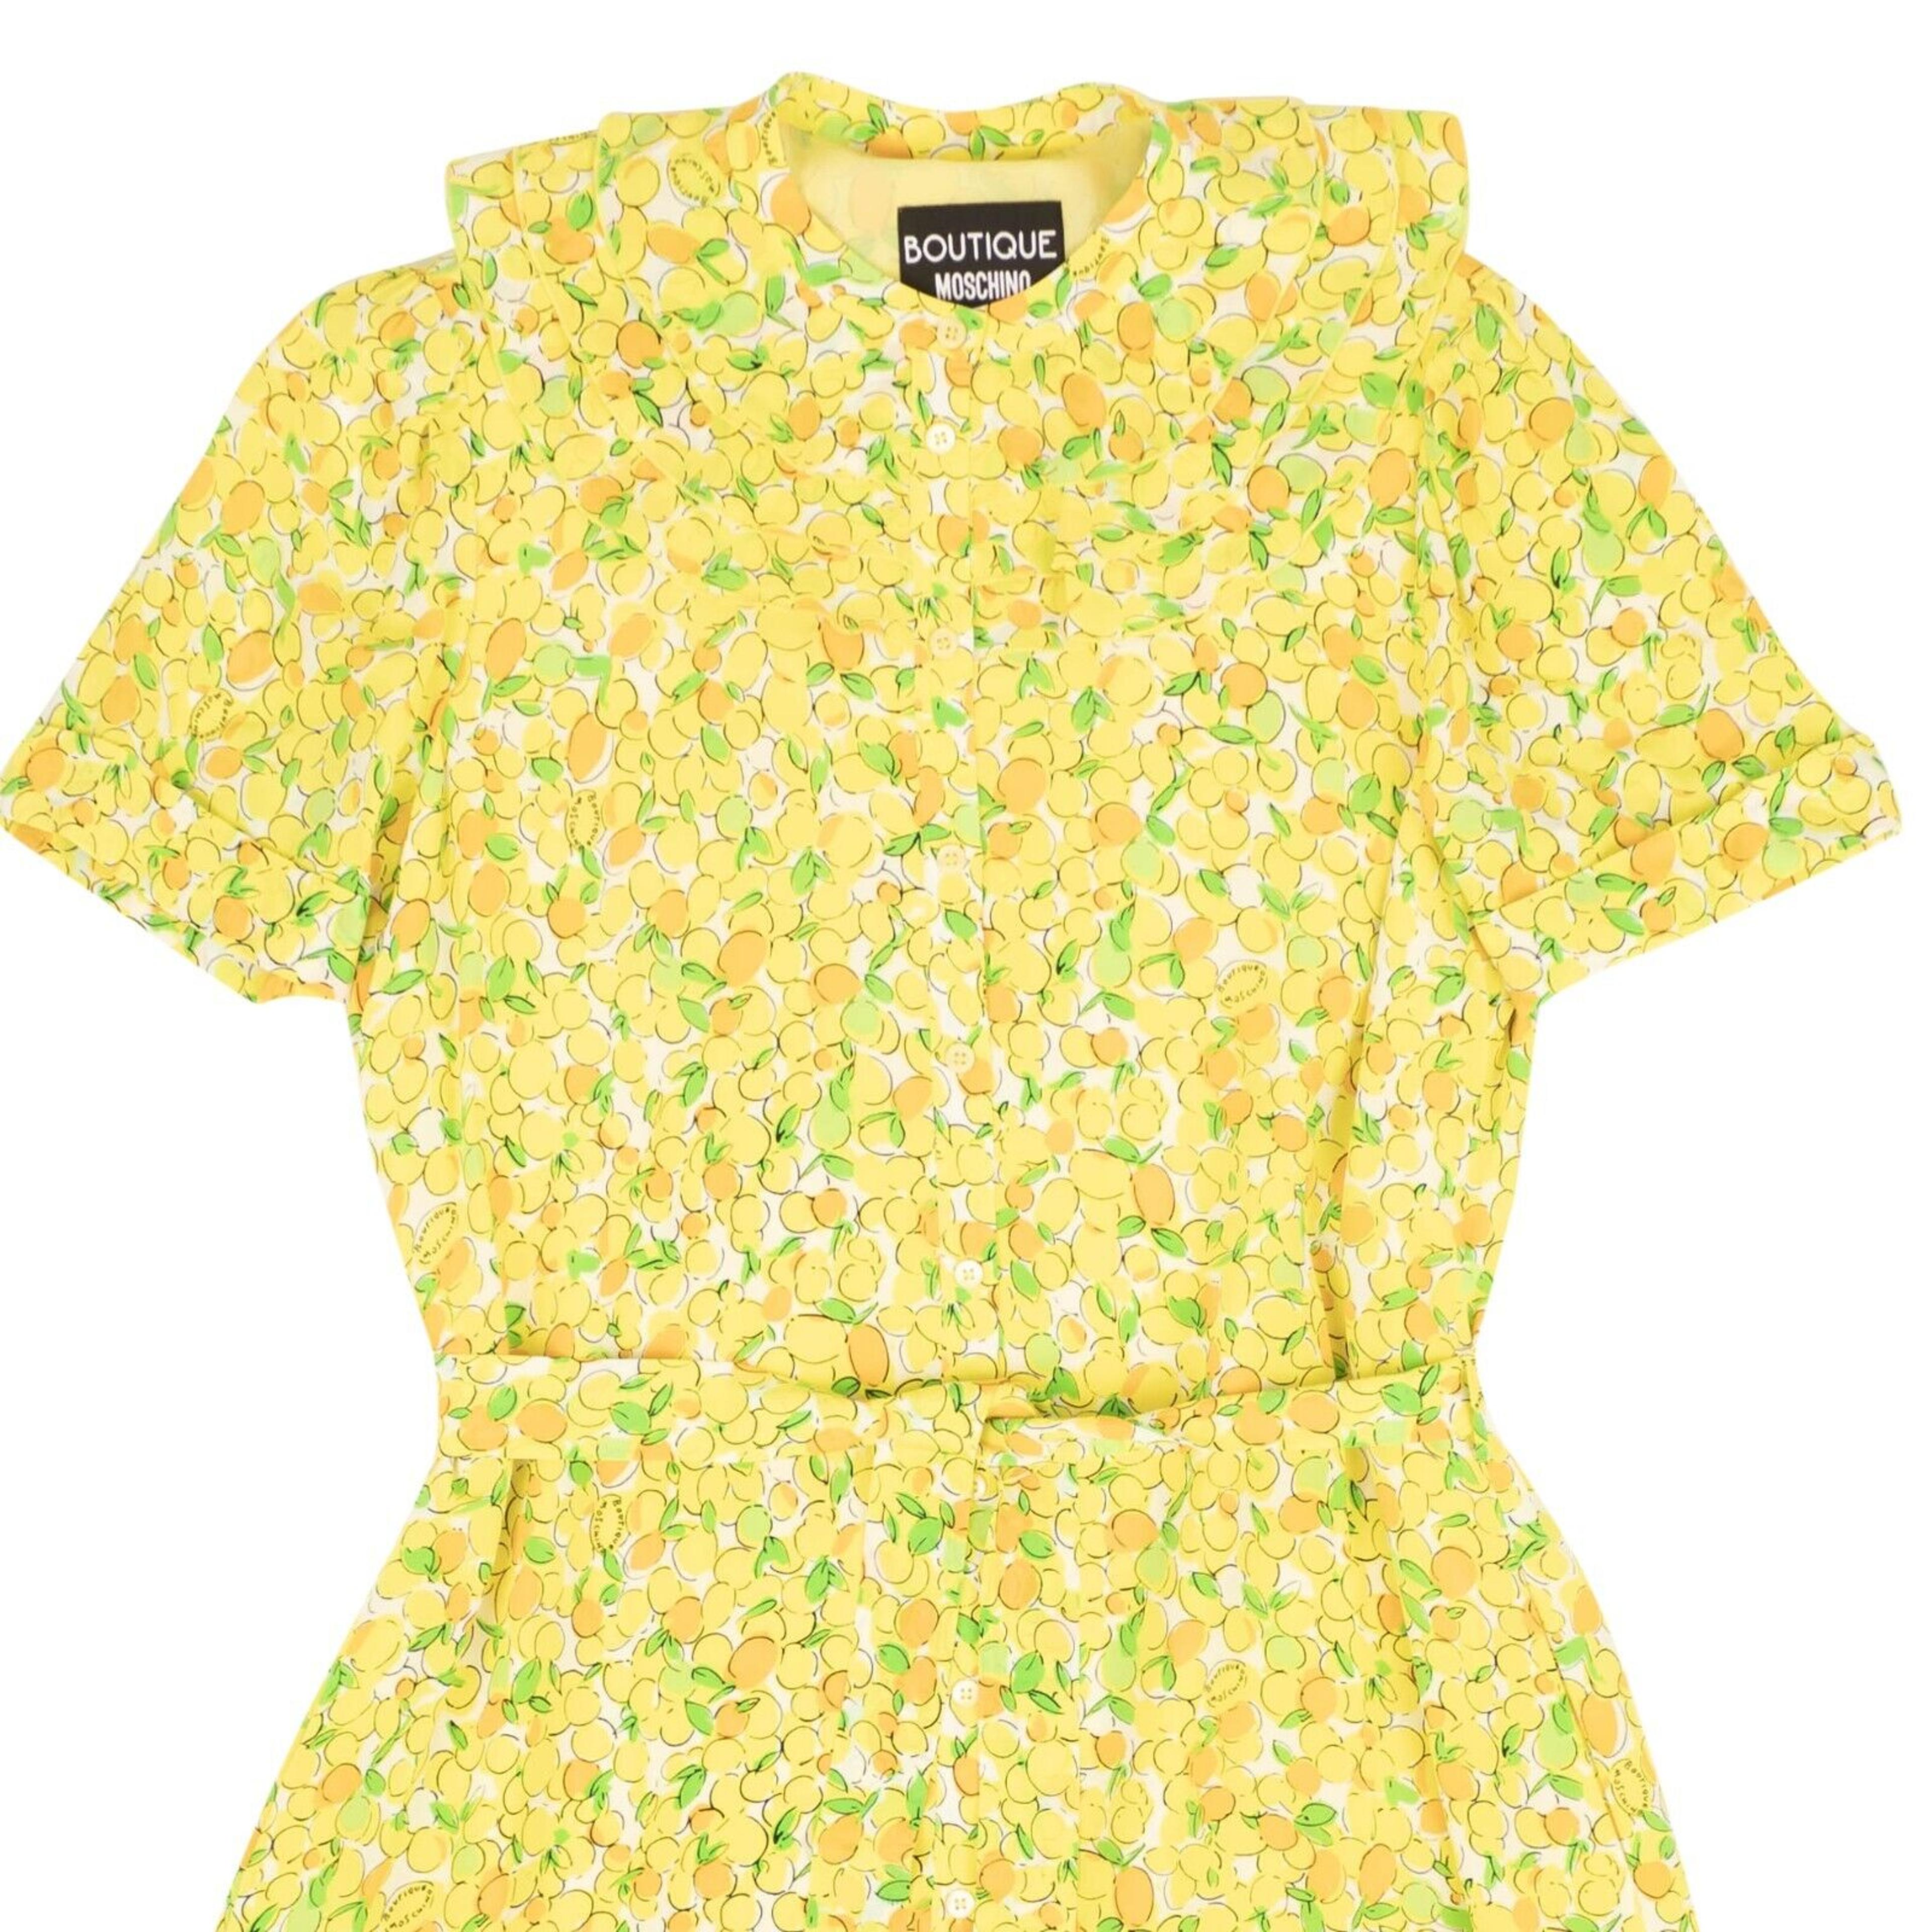 Alternate View 1 of Yellow Lemon Print Silk Ruffle Neck Dress